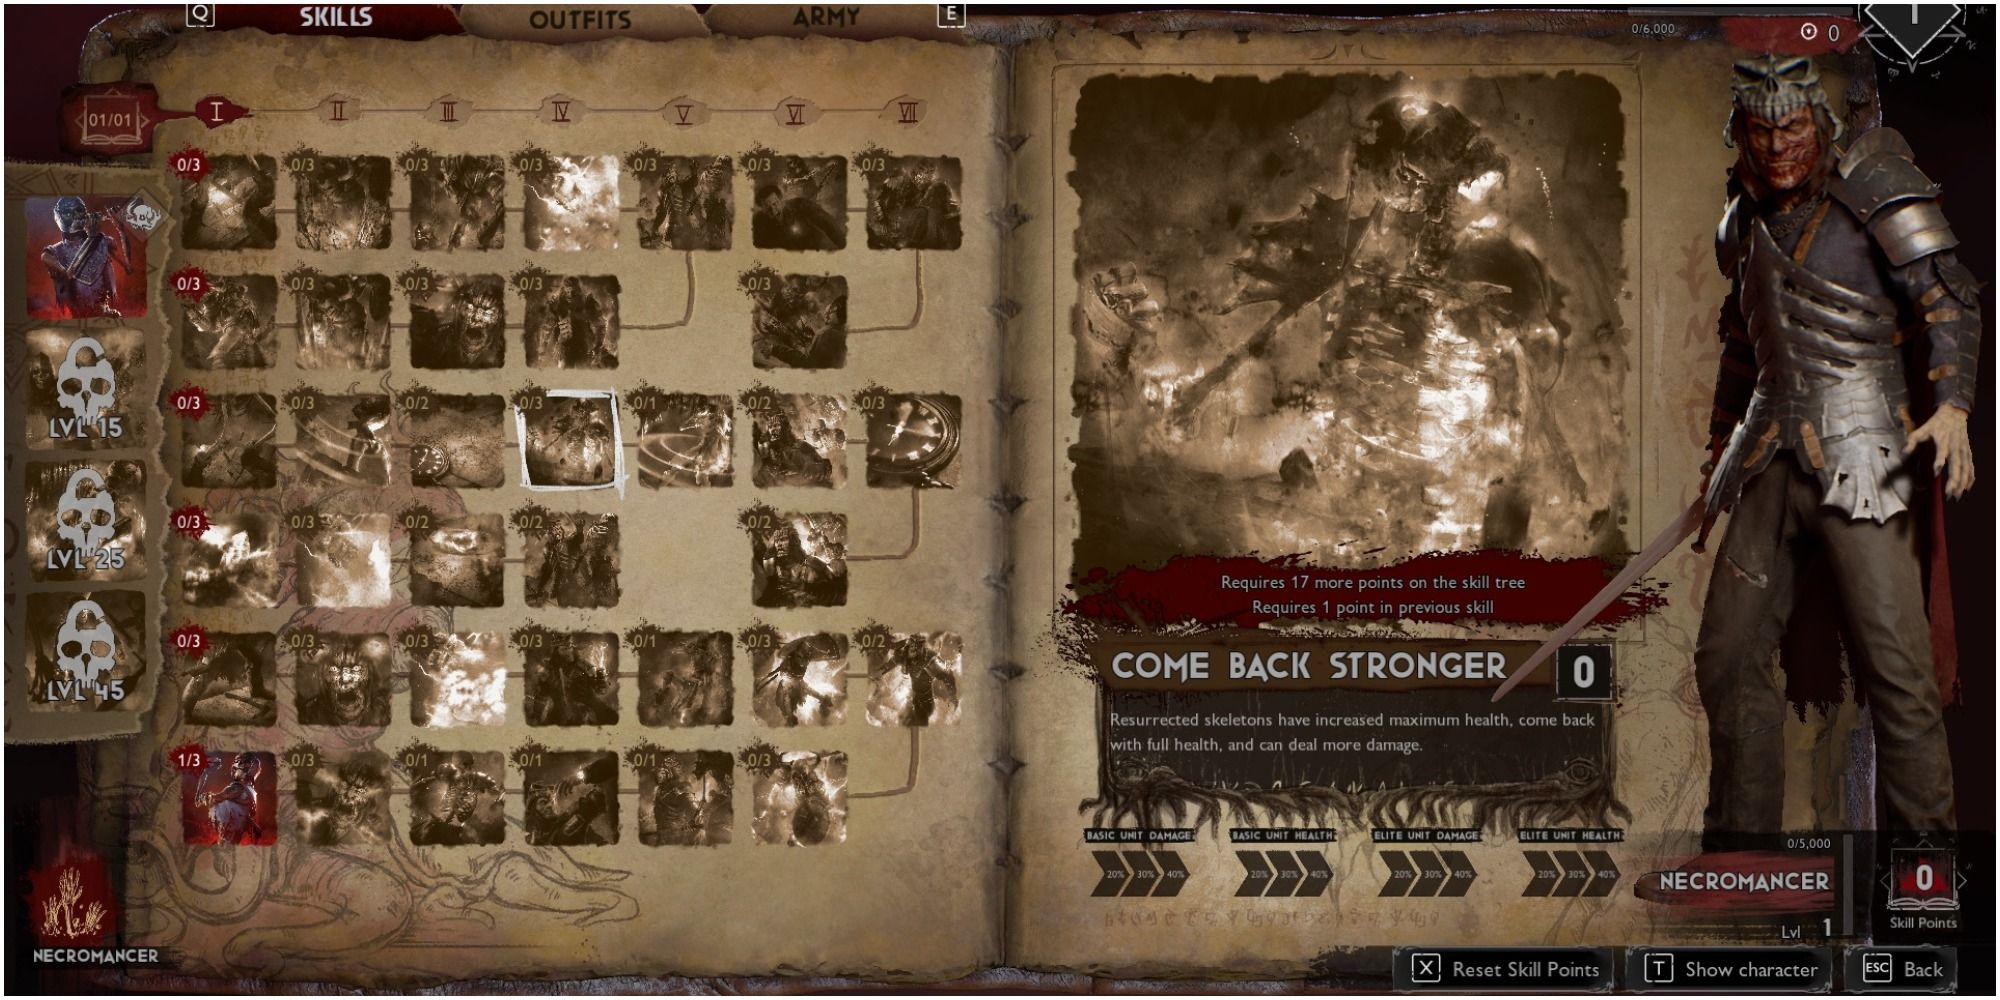 Evil Dead The Game Necromancer Skill Come Back Stronger Description